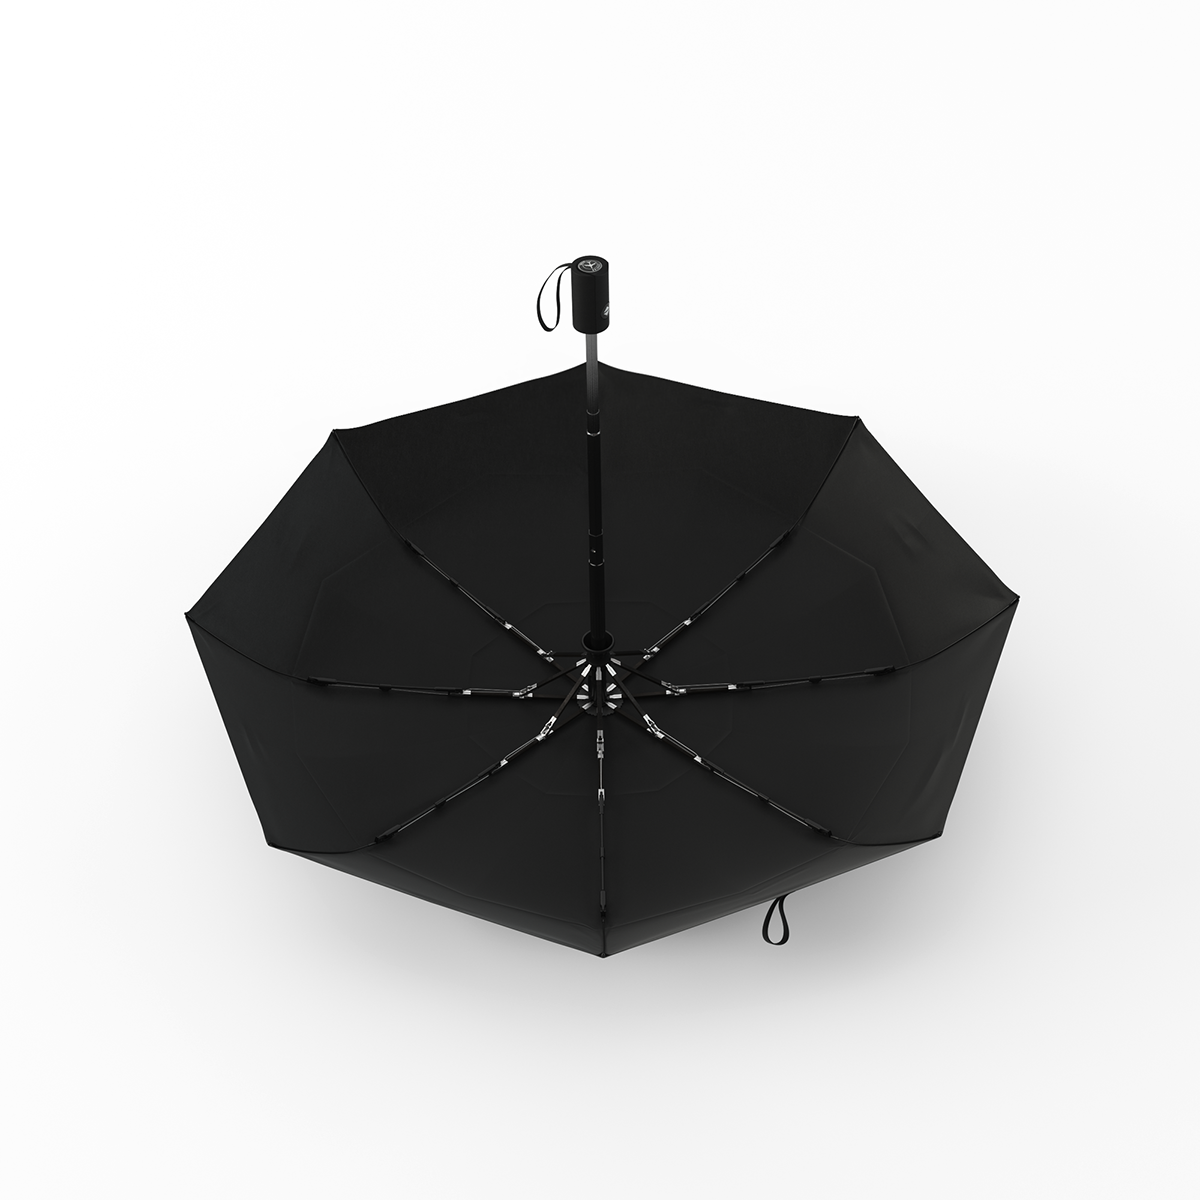 3D Umbrella product visualization product visualization 3dsmax V-ray modeling